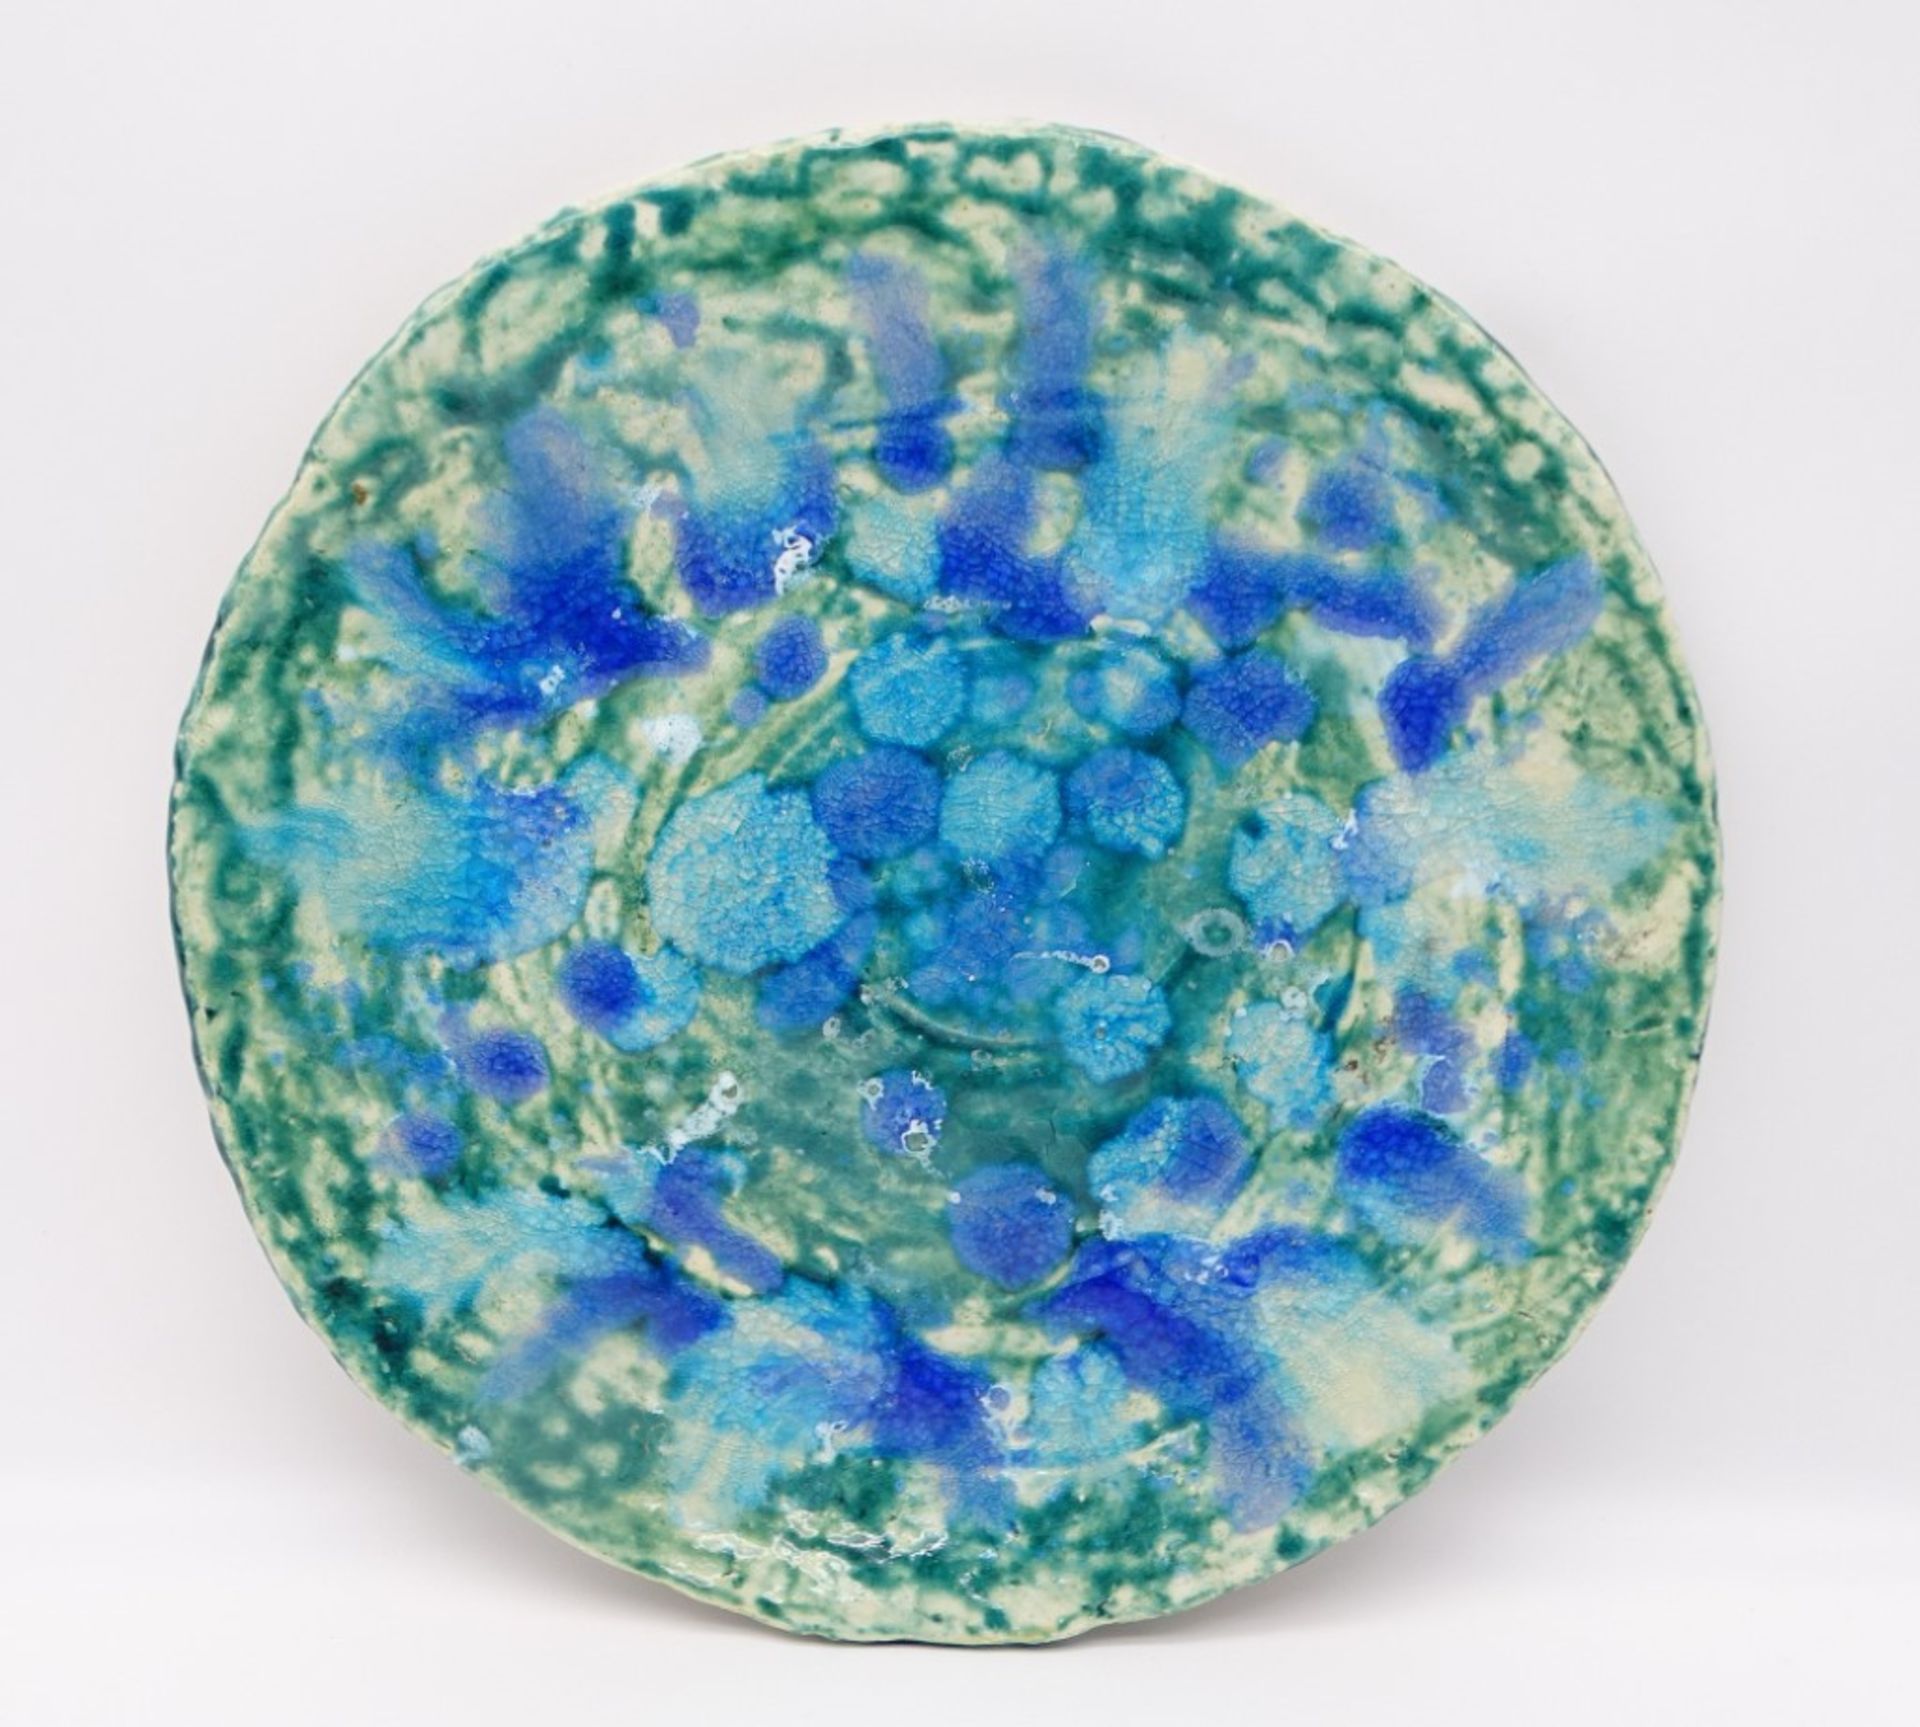 Blau-grün glasierter Teller aus Galerie-Auflösung, Ø 35,5 cm